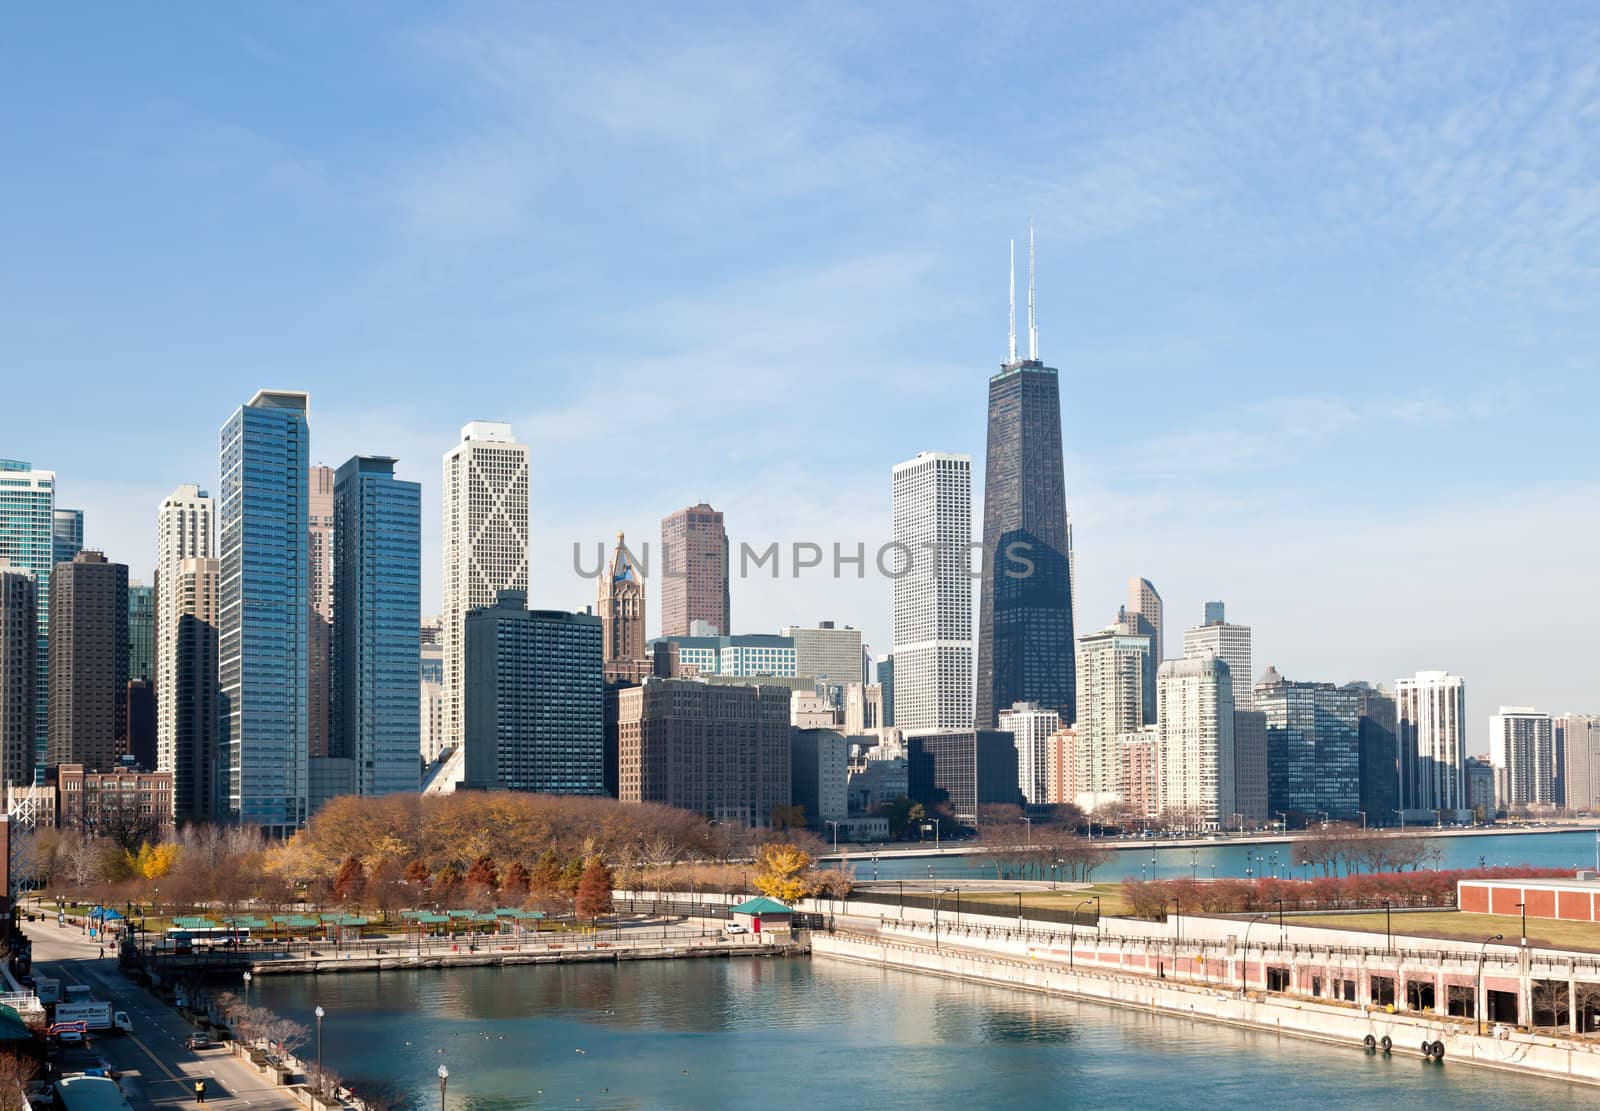 The Chicago Skyline along the lake shore